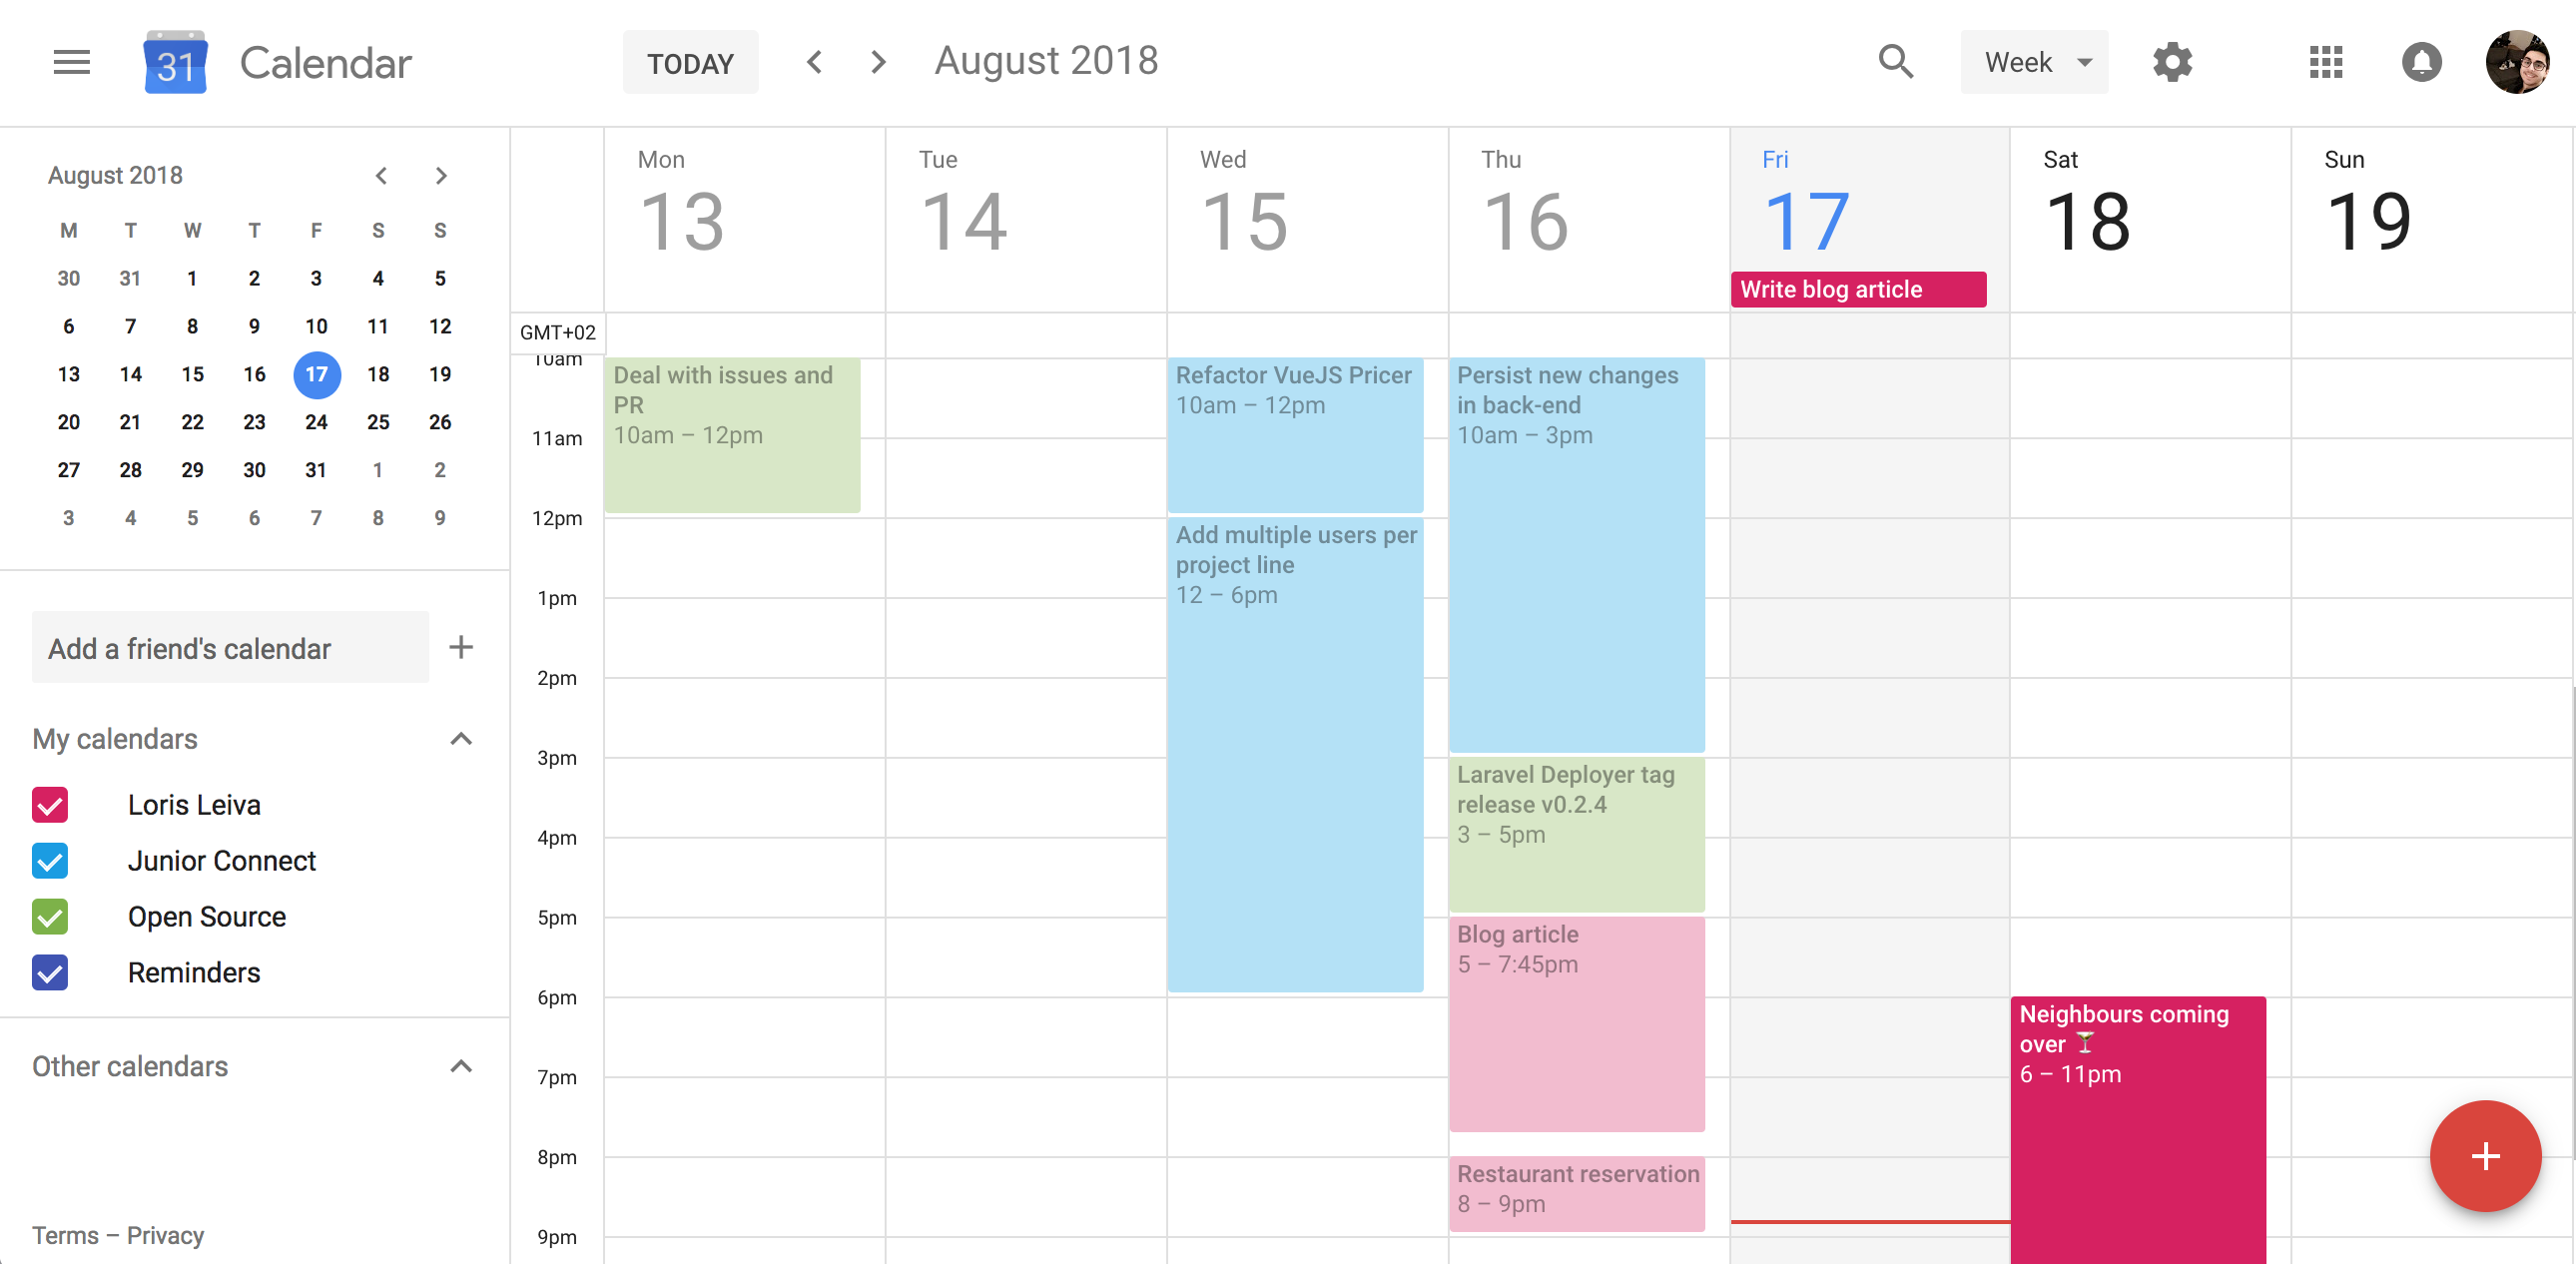 Calendar events in the Google app